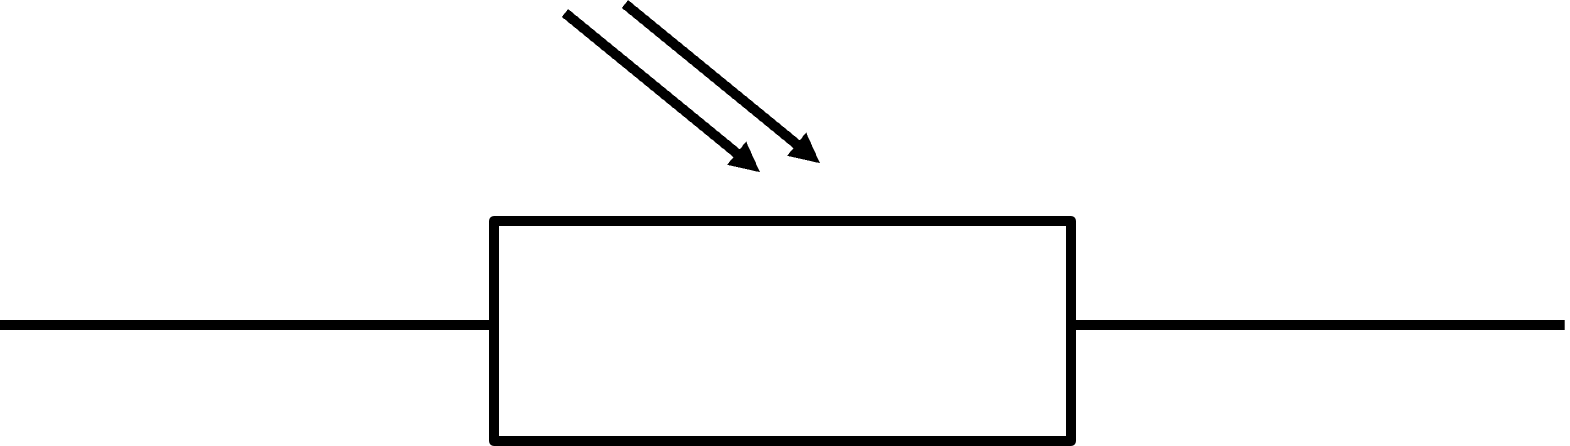 Light dependent resistors symbol